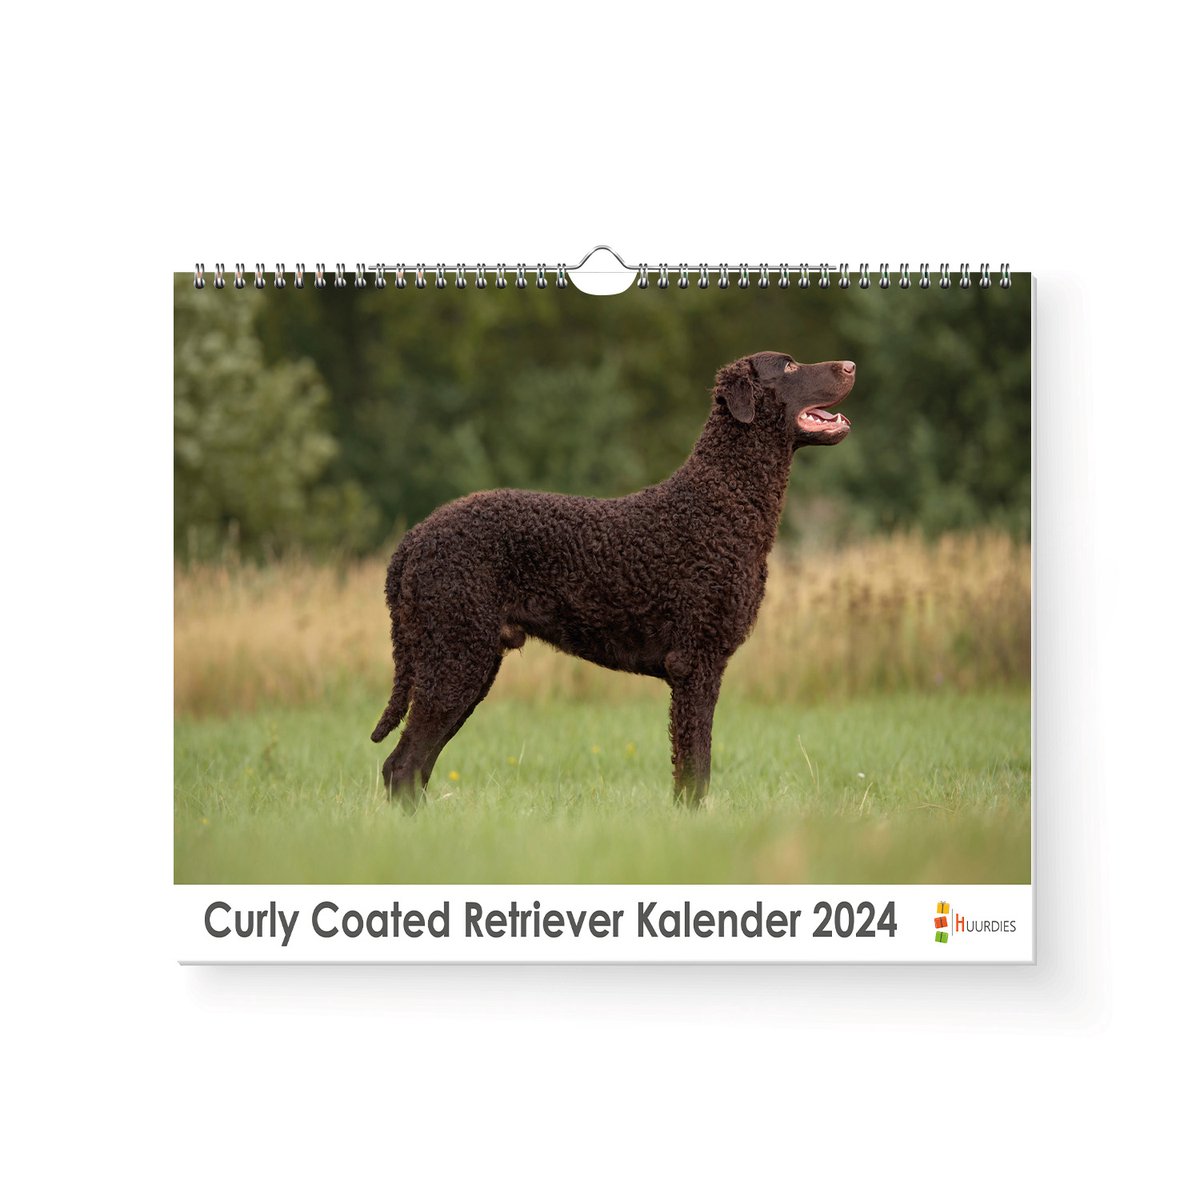 Kalender 2024 - Curly Coated Retriever - 35x24cm - 300gms - Spiraalgebonden - Inclusief ophanghaak